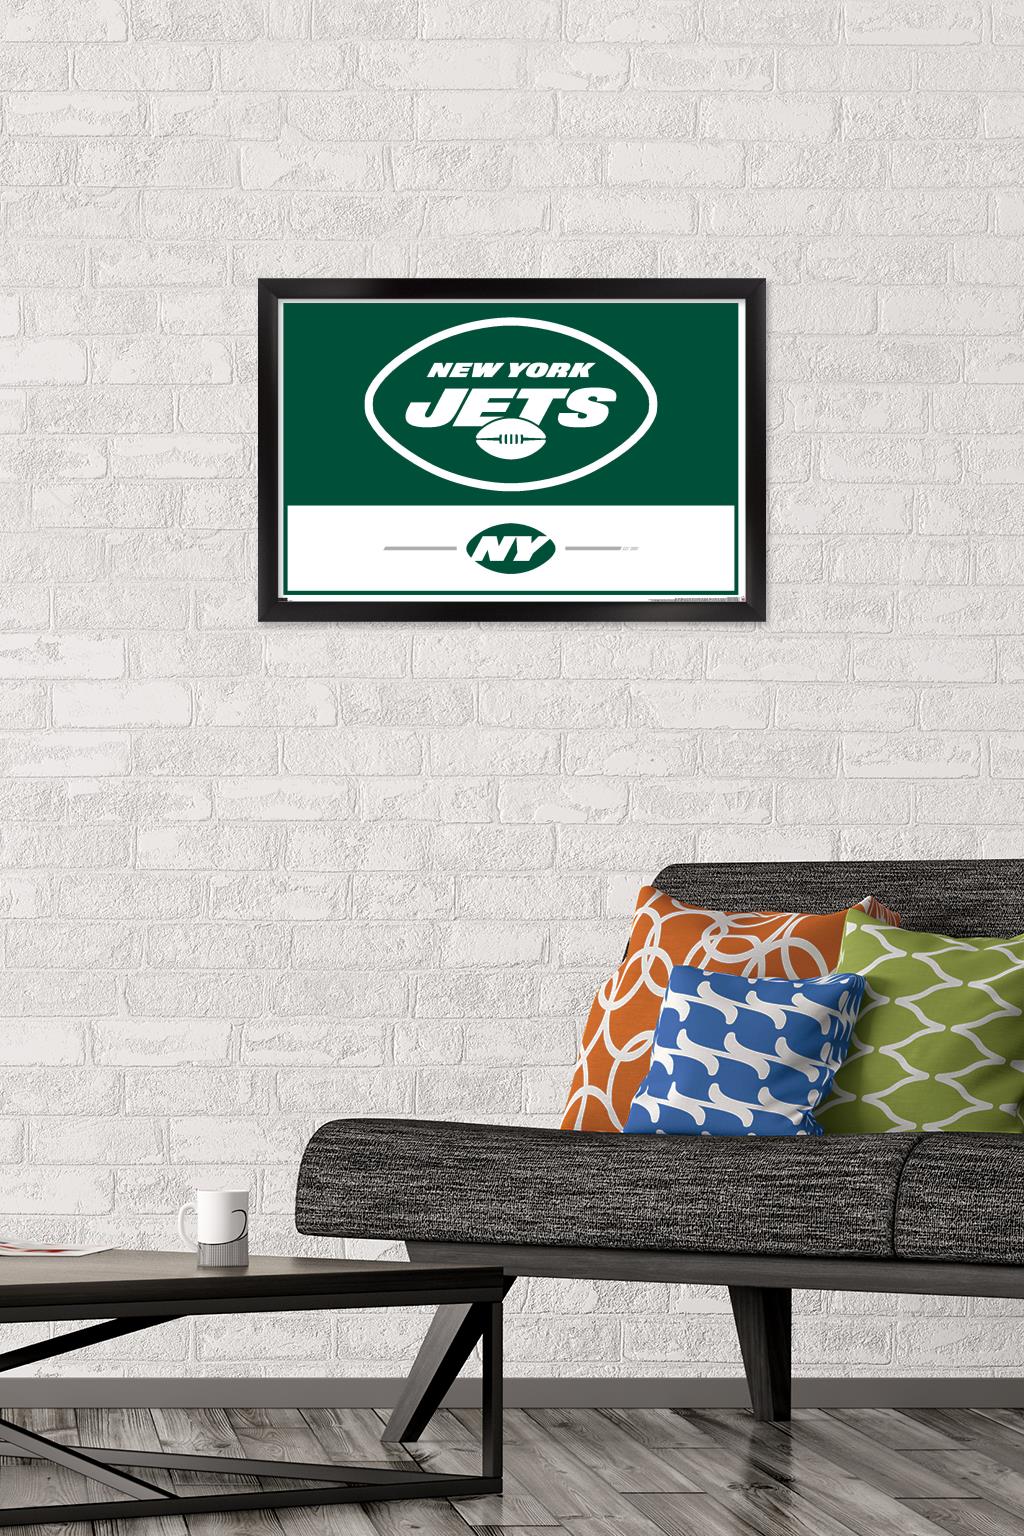 NFL New York Jets - Logo 21 Wall Poster, 14.725" x 22.375", Framed - image 2 of 3